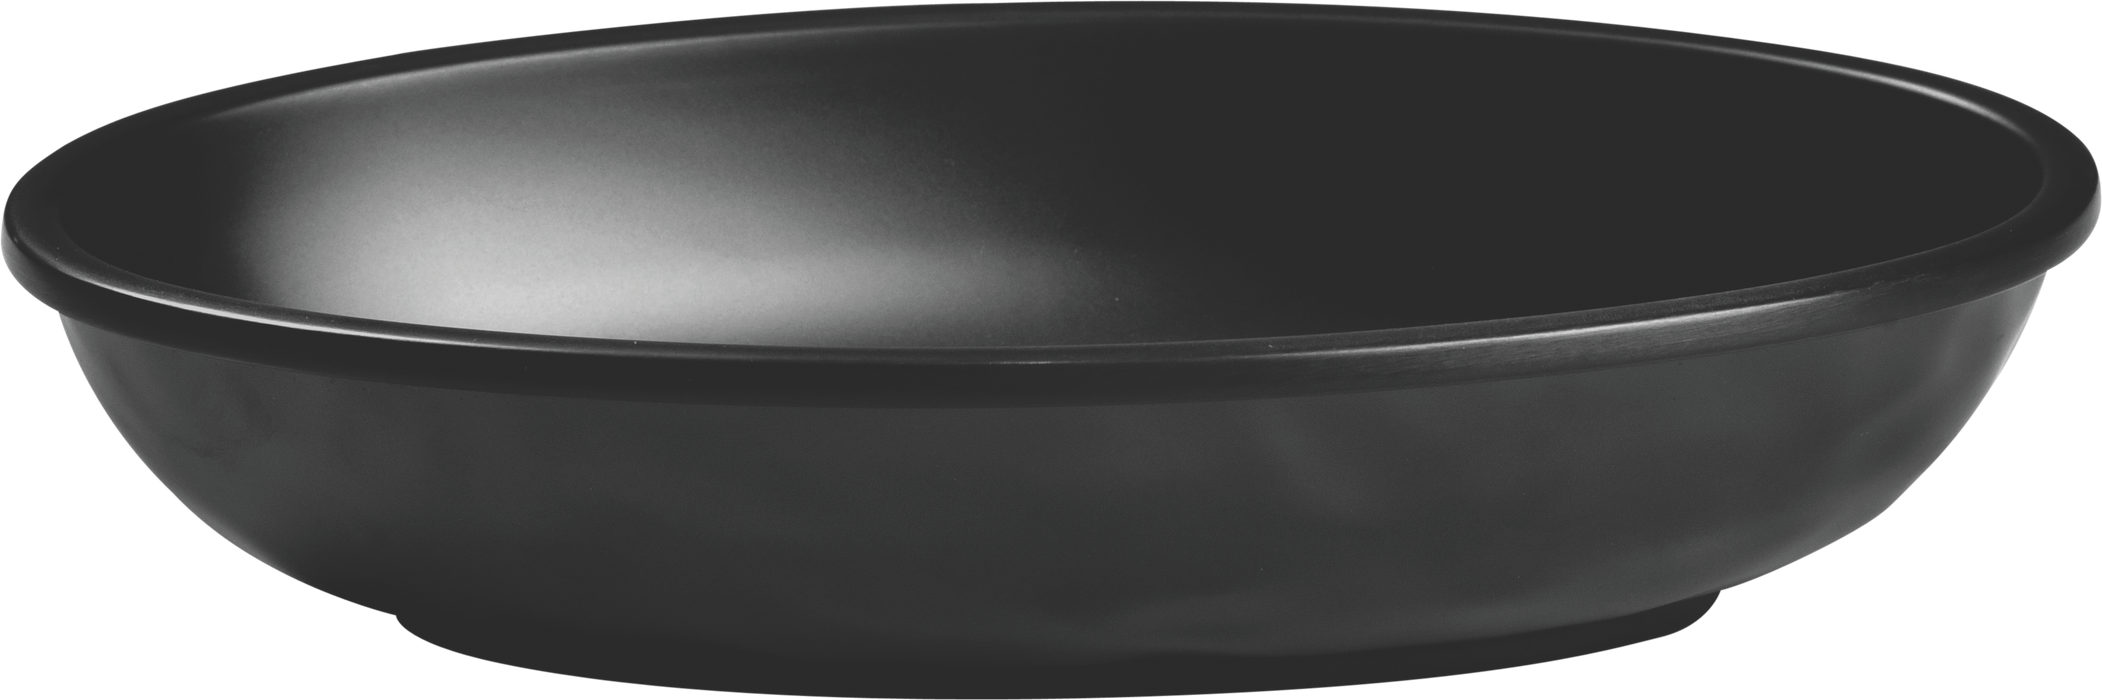 Melamine Matte Oval Dish 8.5 inch, 20 Oz. Black